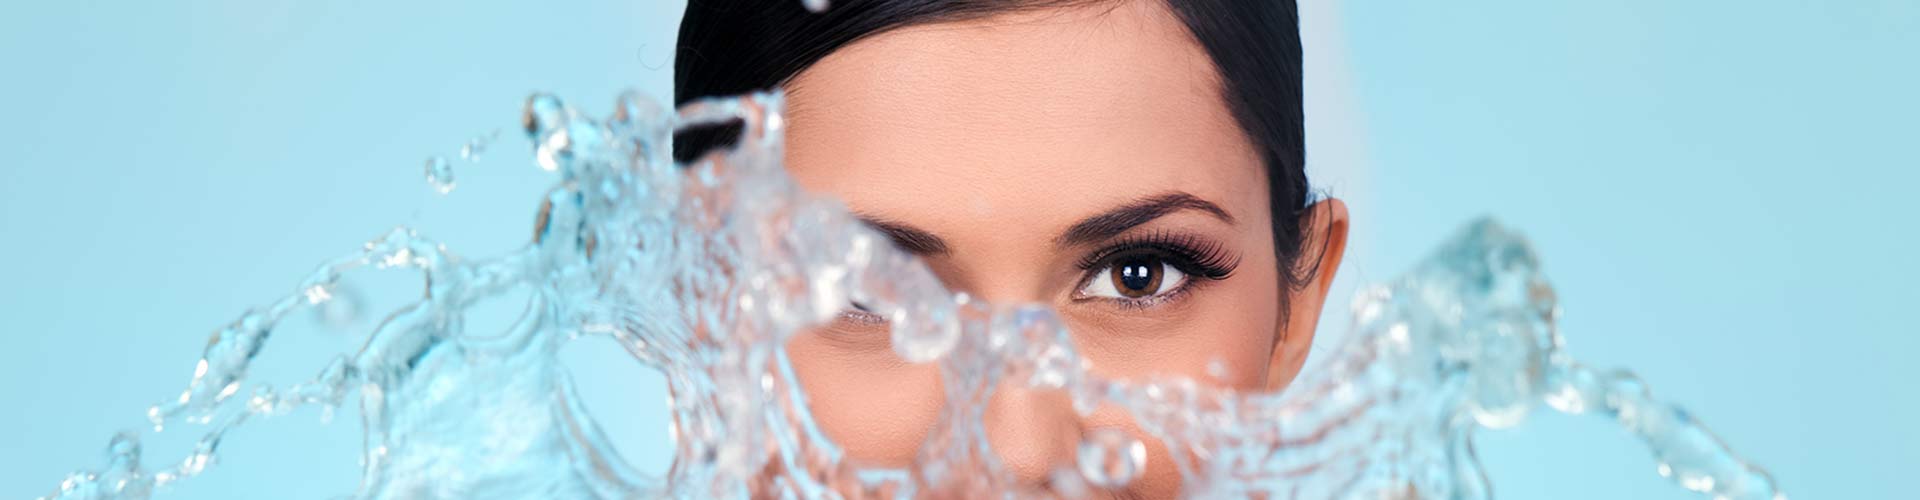 Woman with water splashing on her eyes